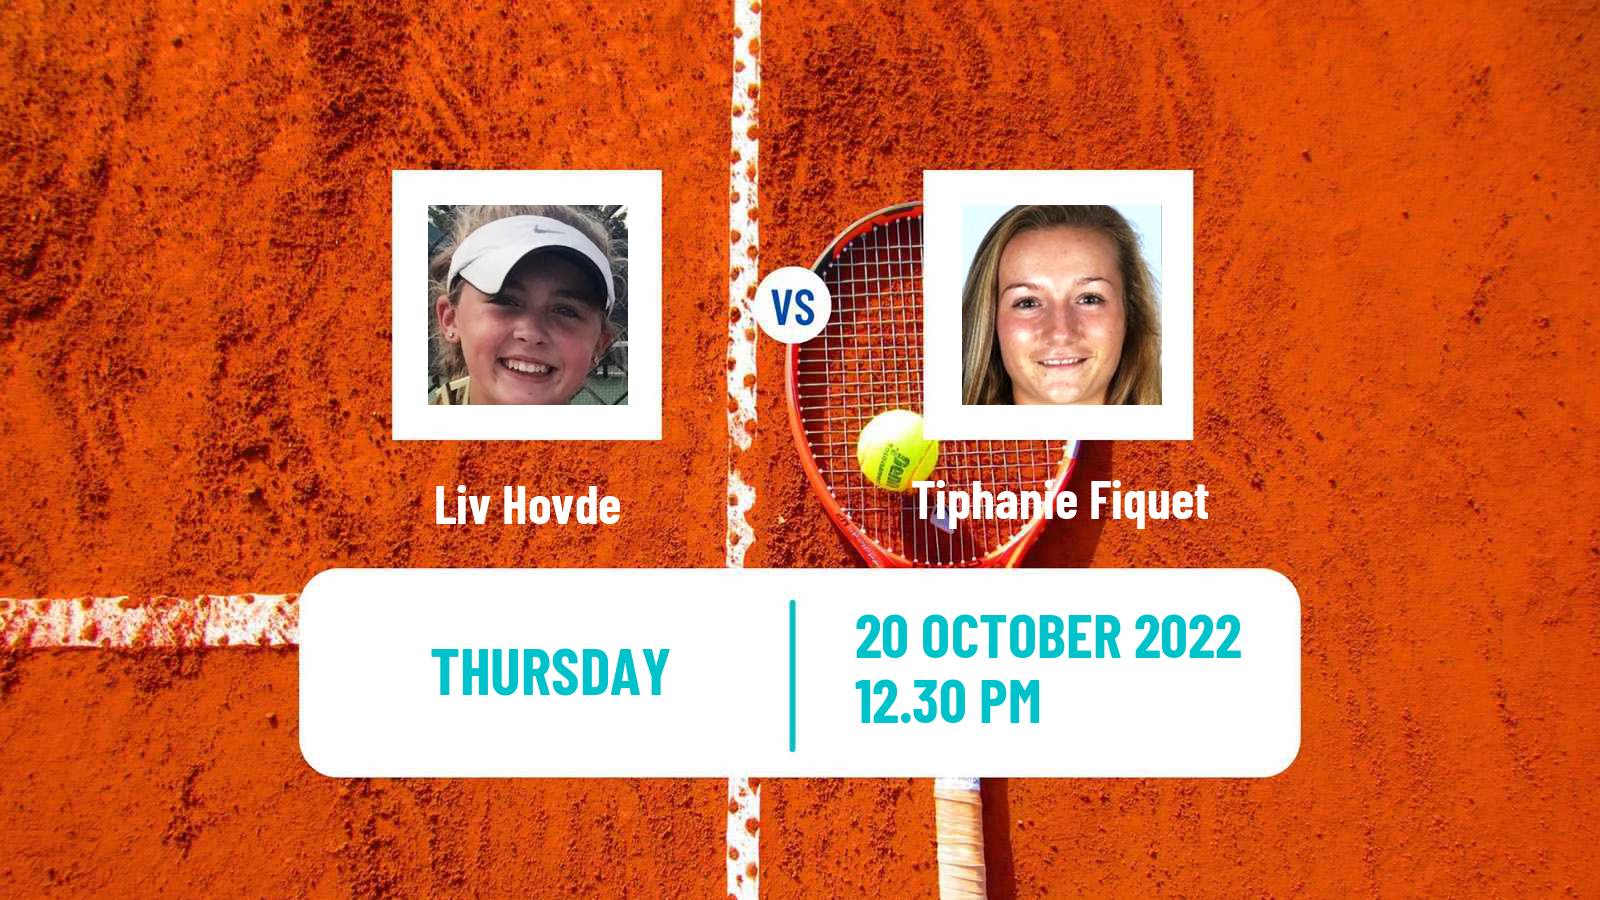 Tennis ITF Tournaments Liv Hovde - Tiphanie Fiquet